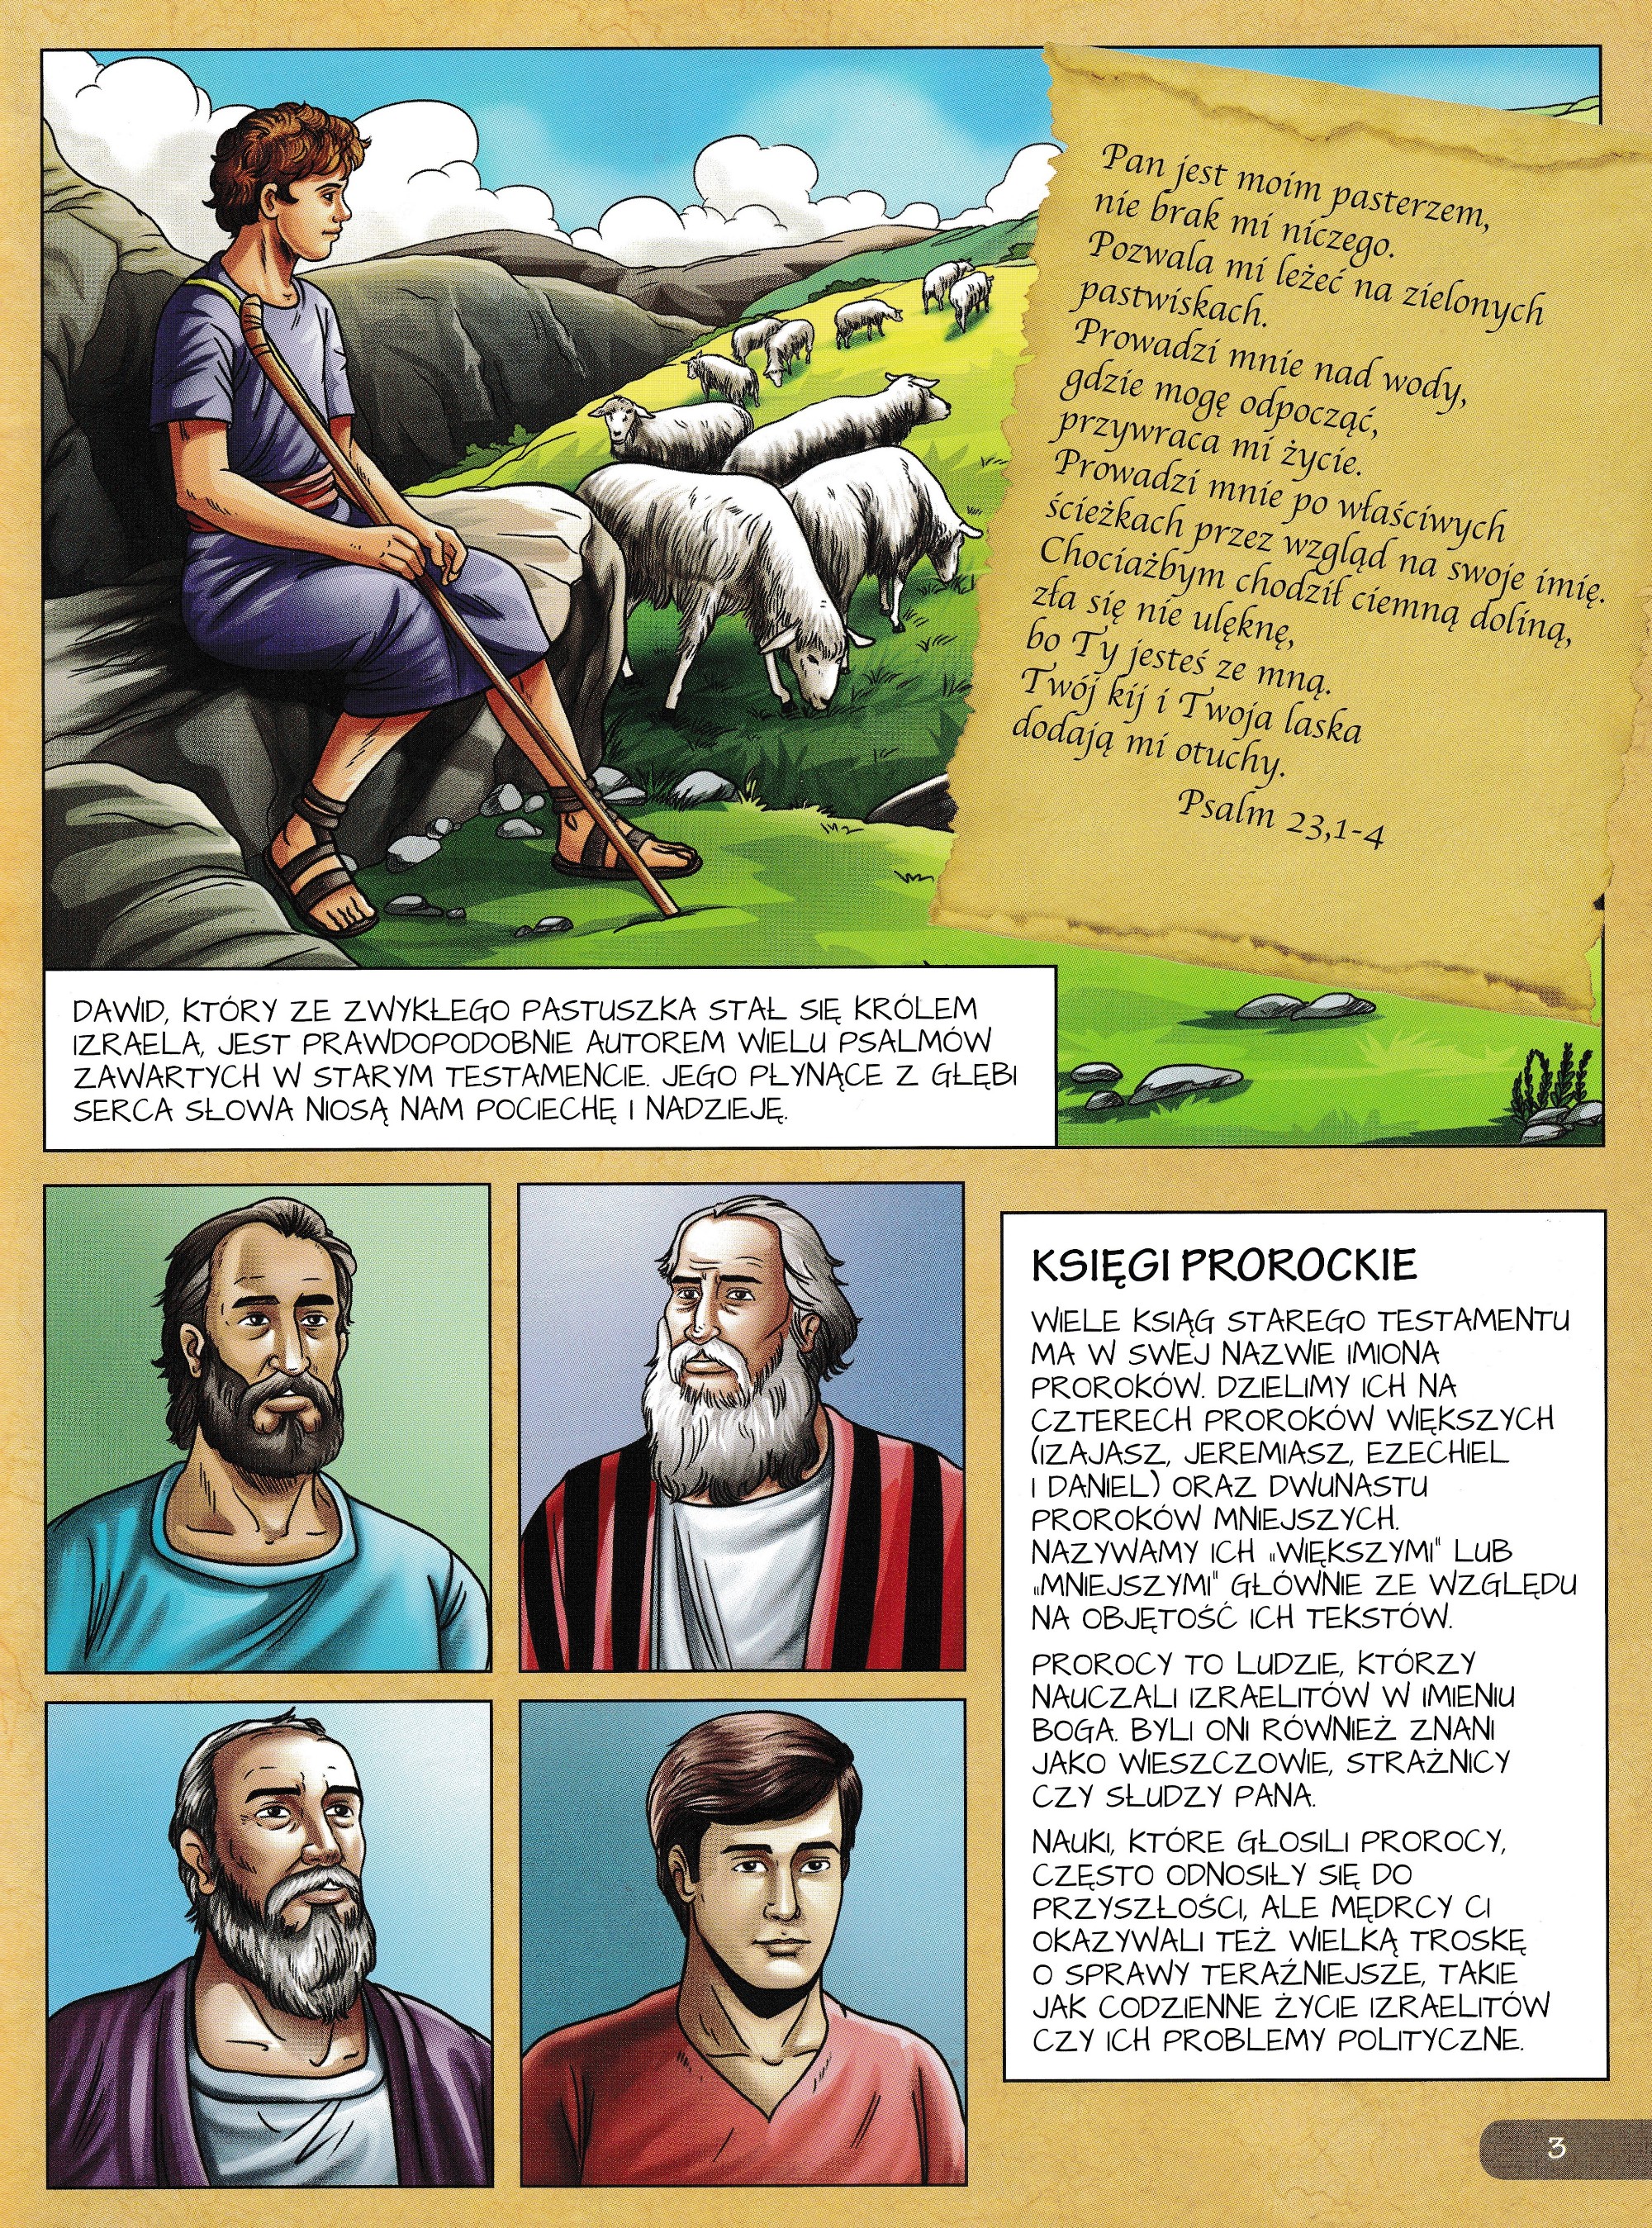 Biblia w komiksie